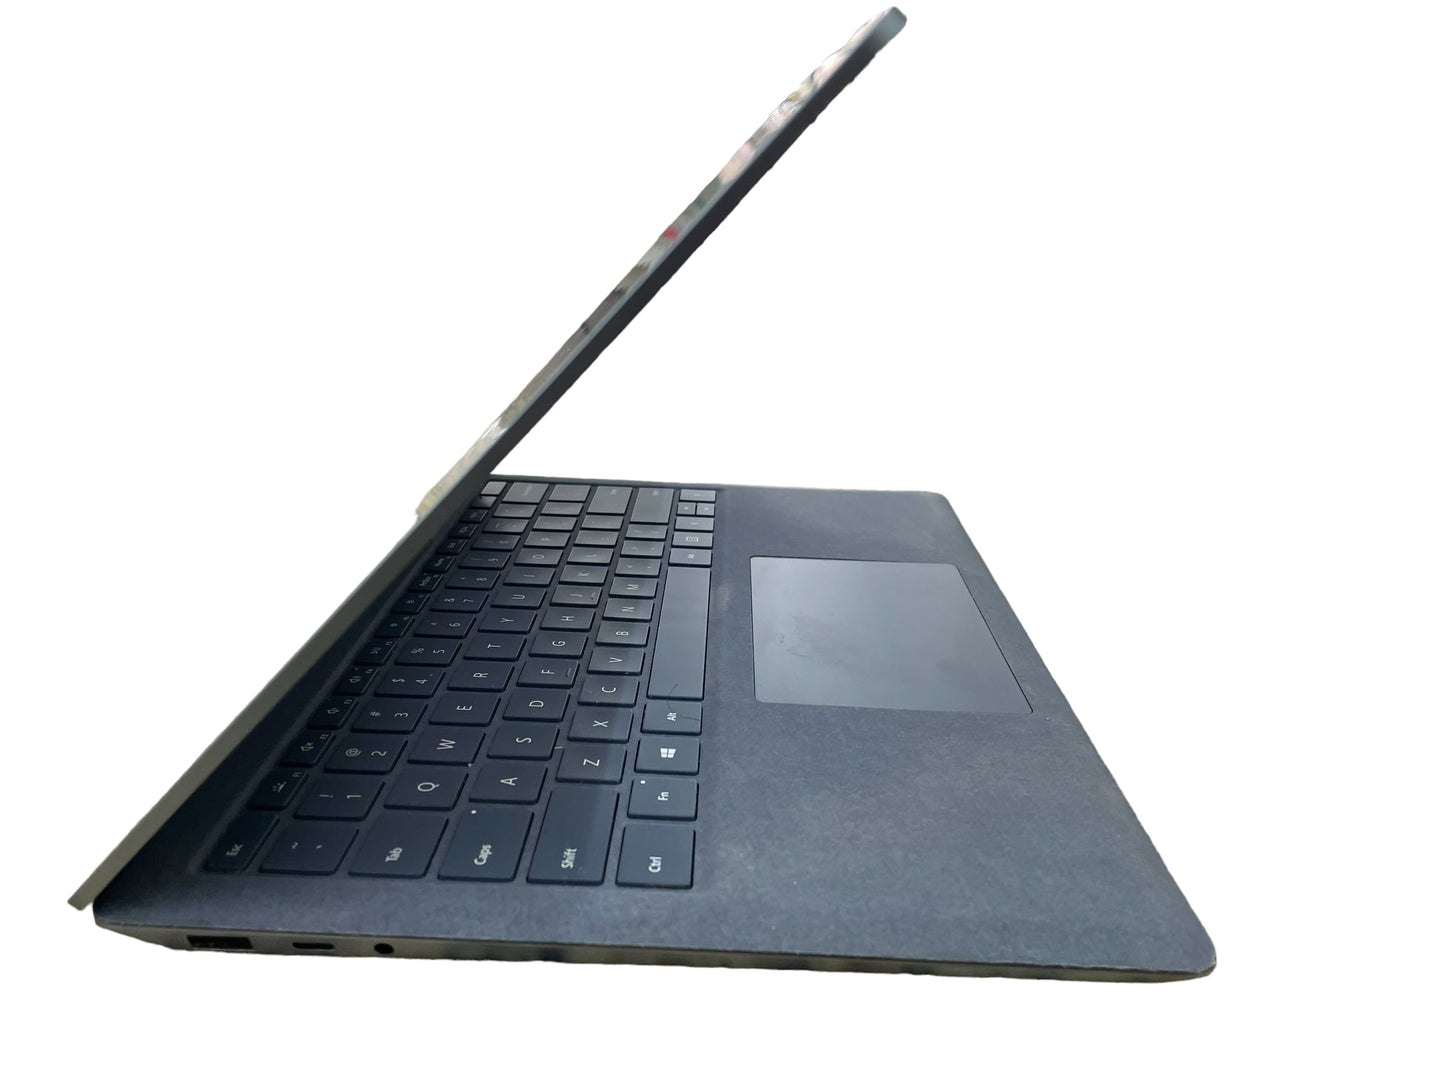 Microsoft Surface Laptop 4 1950 13.5" (i5-1135G7 @ 2.40GHz, 8GB RAM, 512GB SSD, Windows 11 Home)